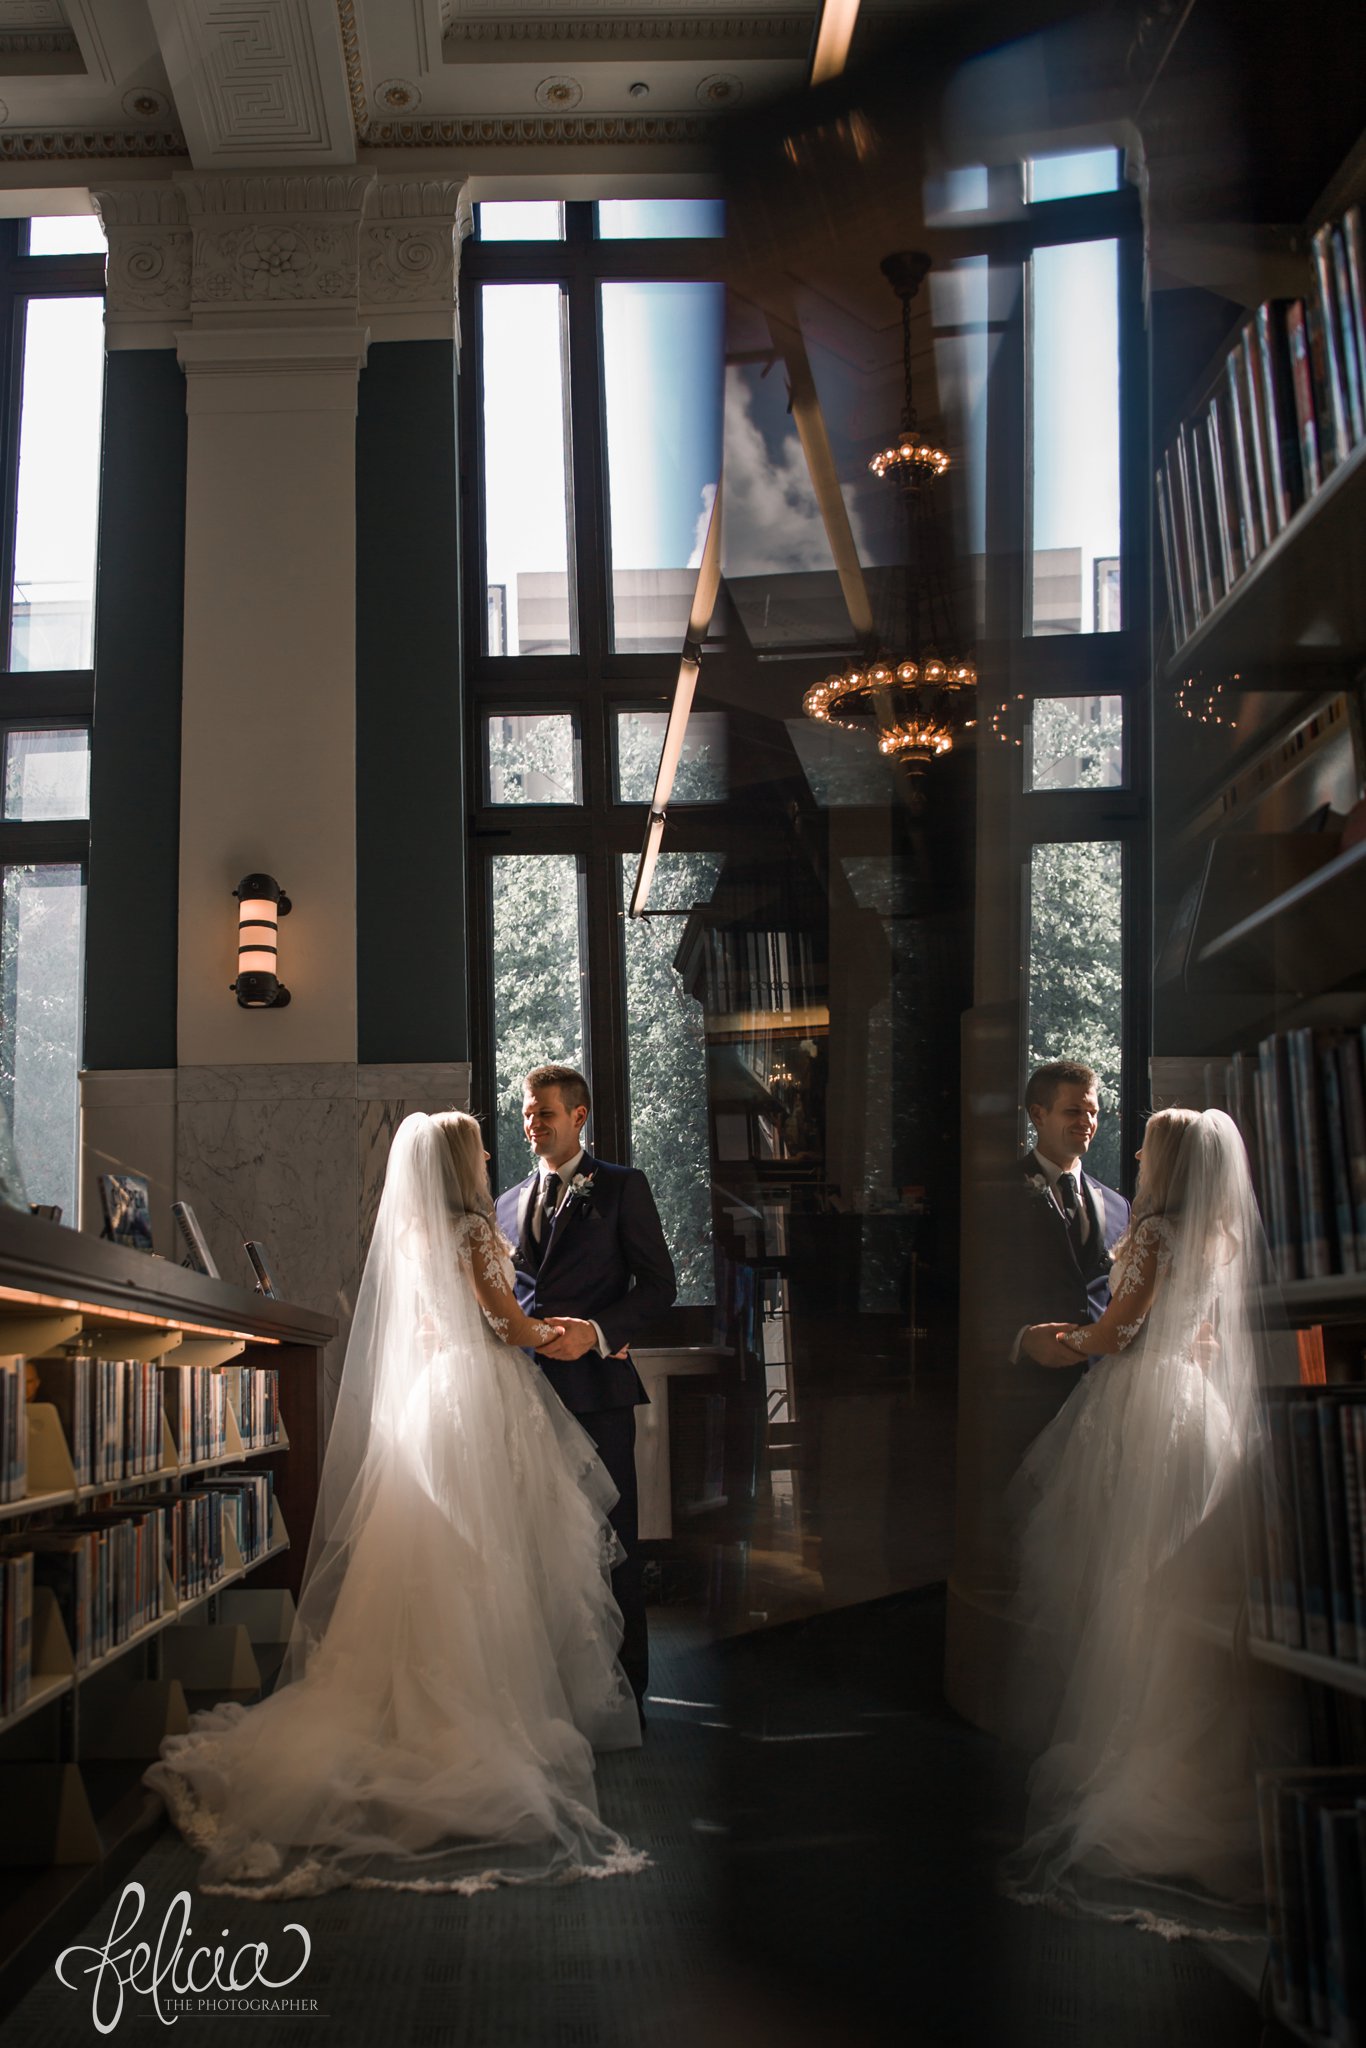 images by feliciathephotographer.com | wedding photographer | kansas city | redemptorist | classic | joy | whimsical | romantic | portraits | reflection | library | true love | joy | lace dress | long sleeve | 